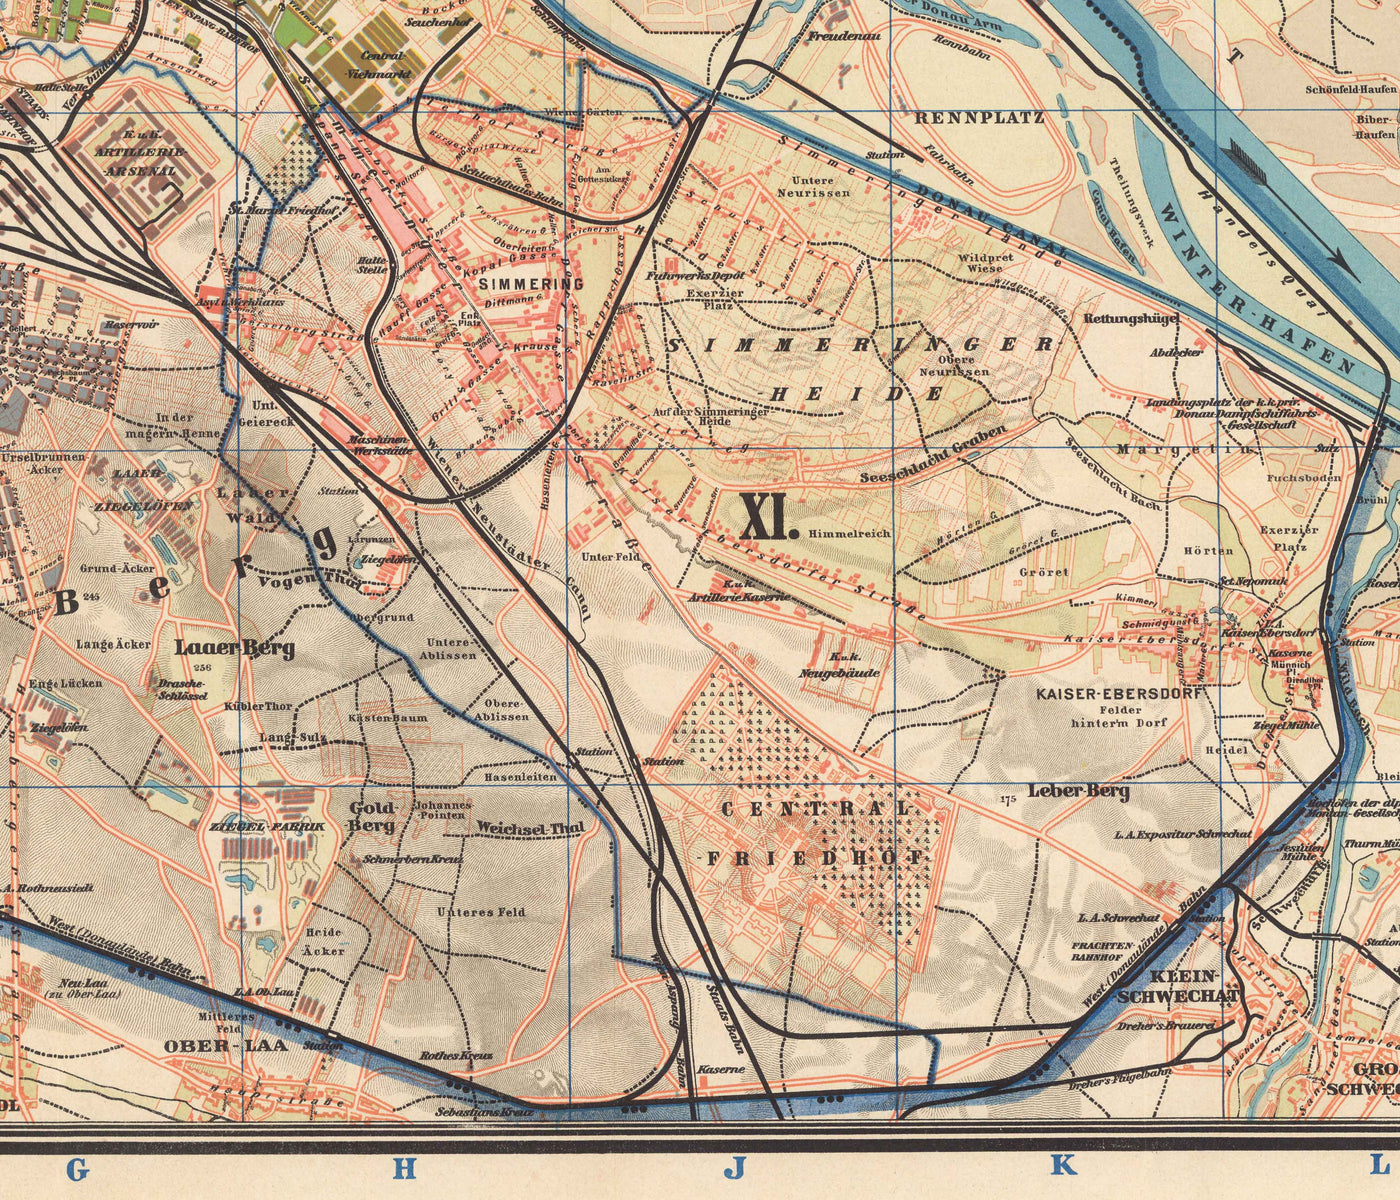 Ancienne carte de Vienne par Gustav Freytag en 1895 - Innere Stadt, Leopoldstadt, Wieden, Margareten, Landstraße